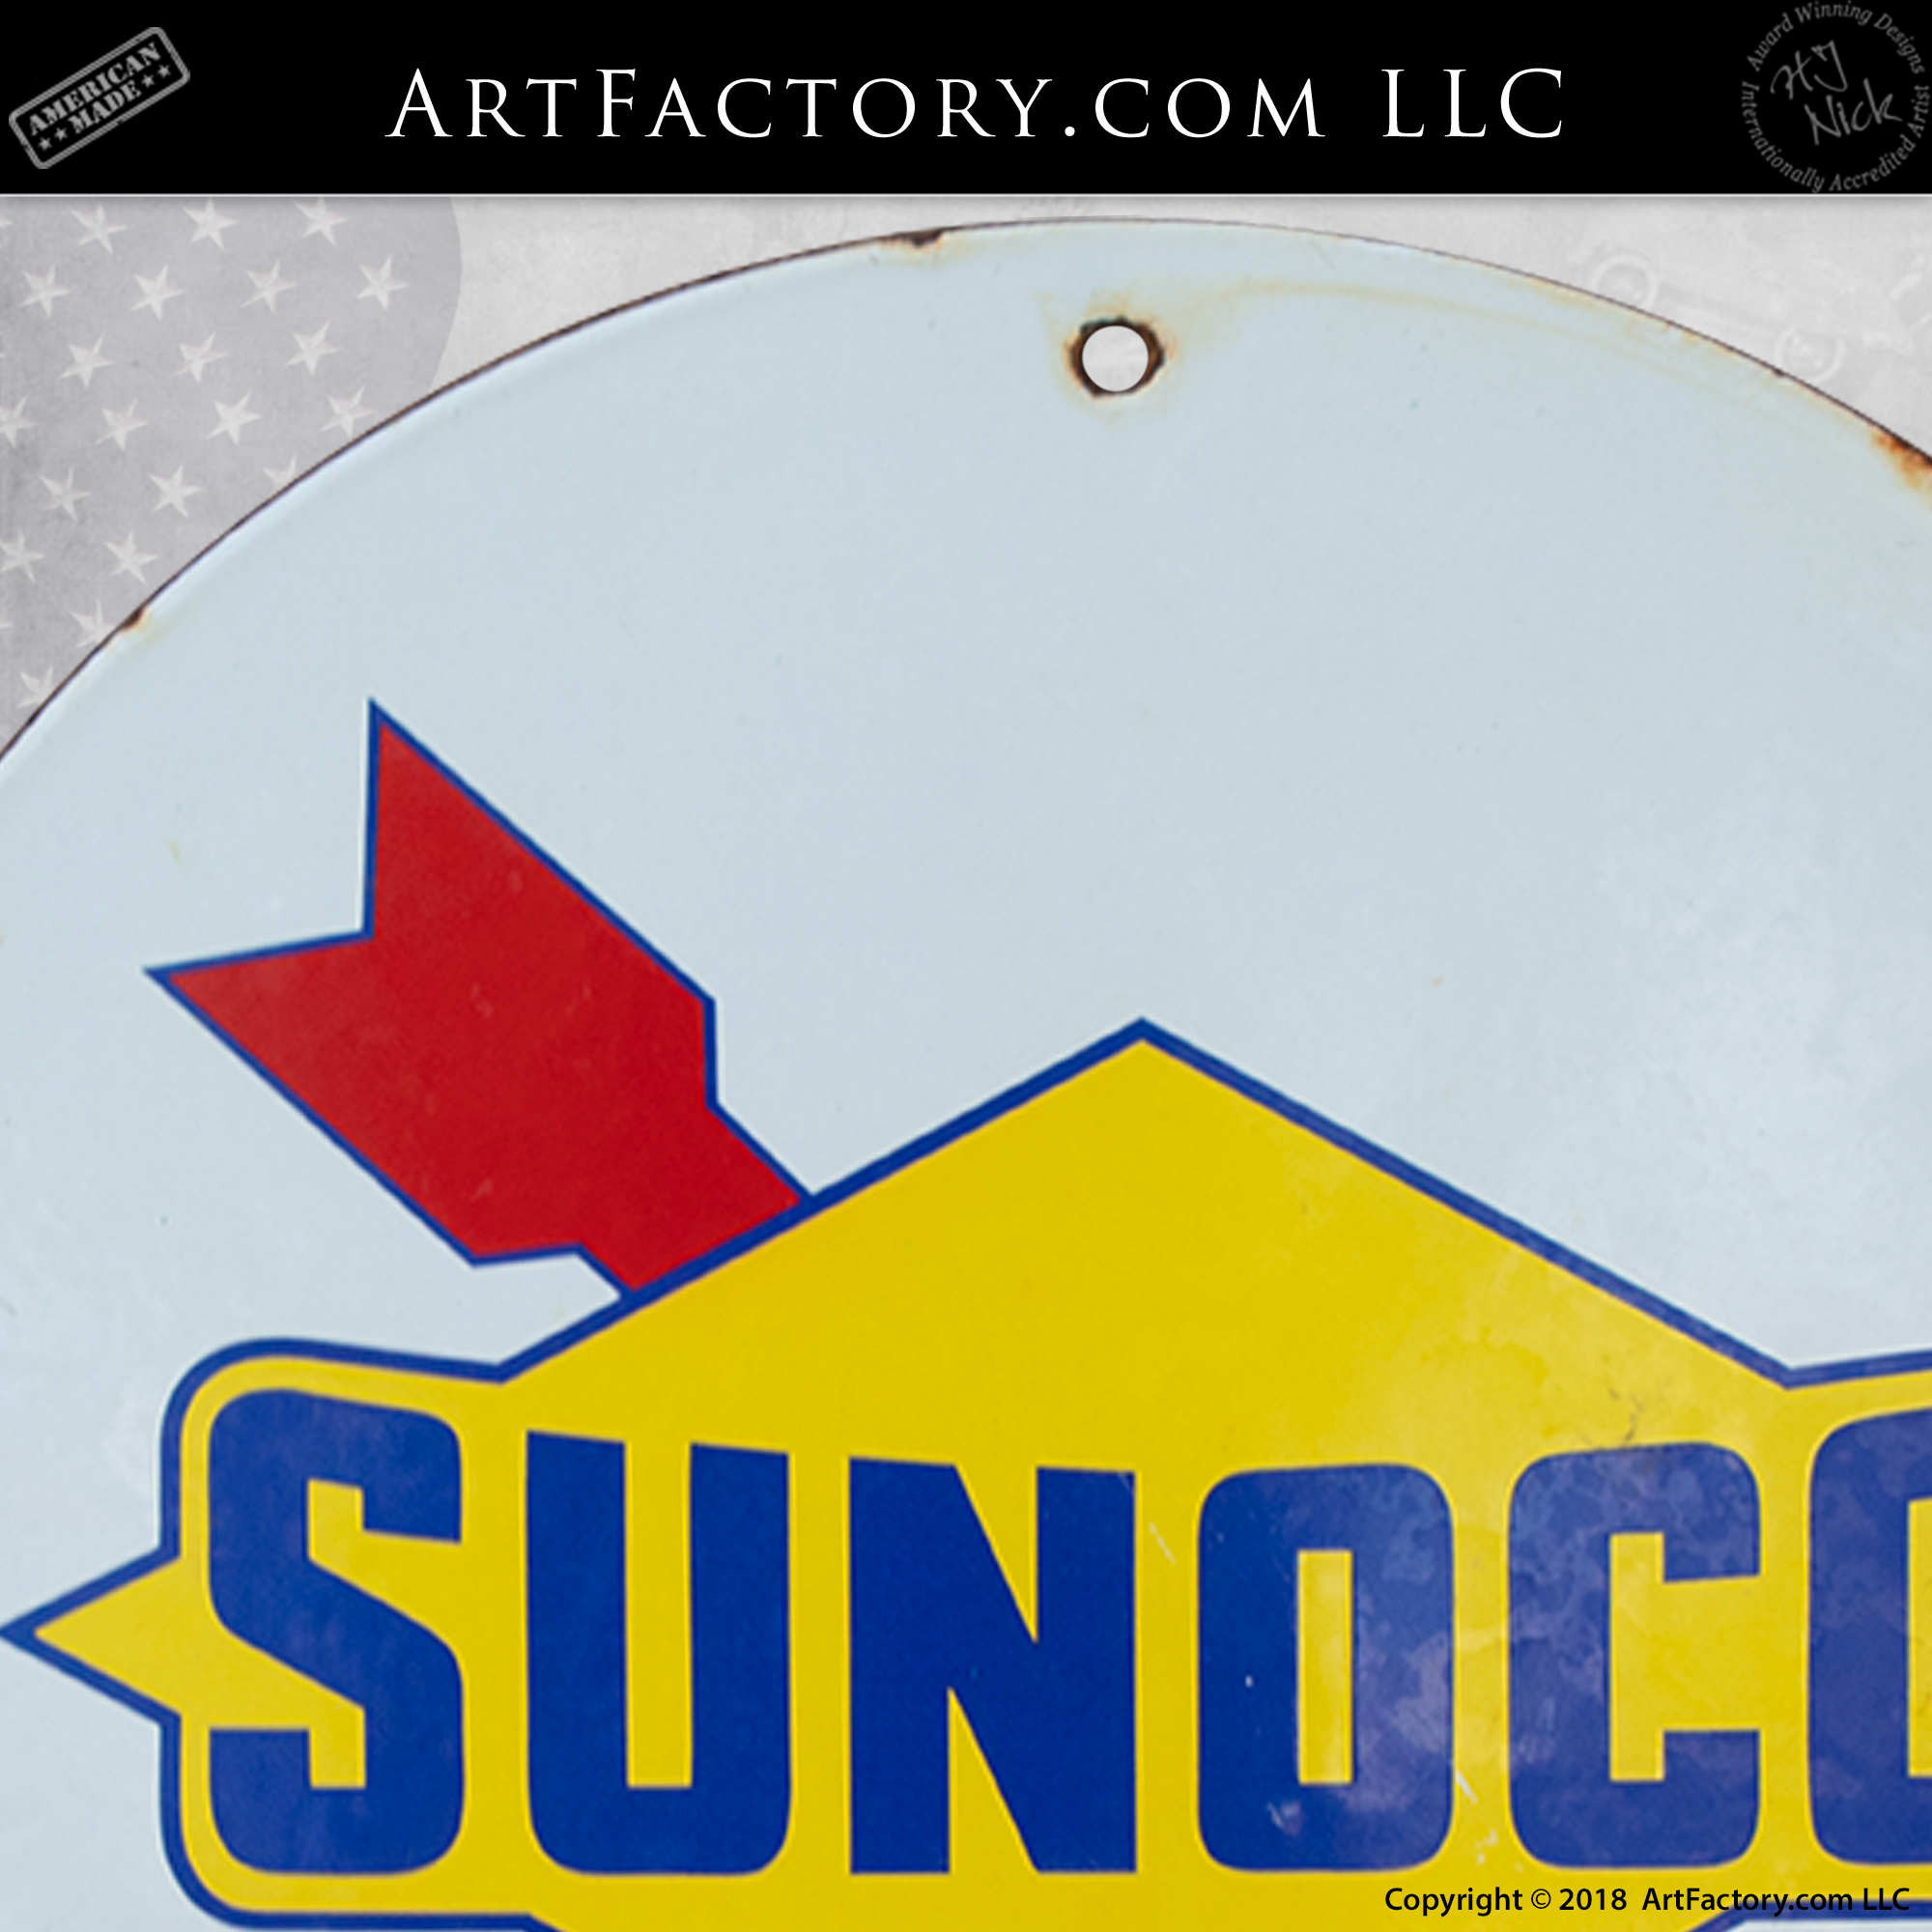 Sunoco Racing Gasoline